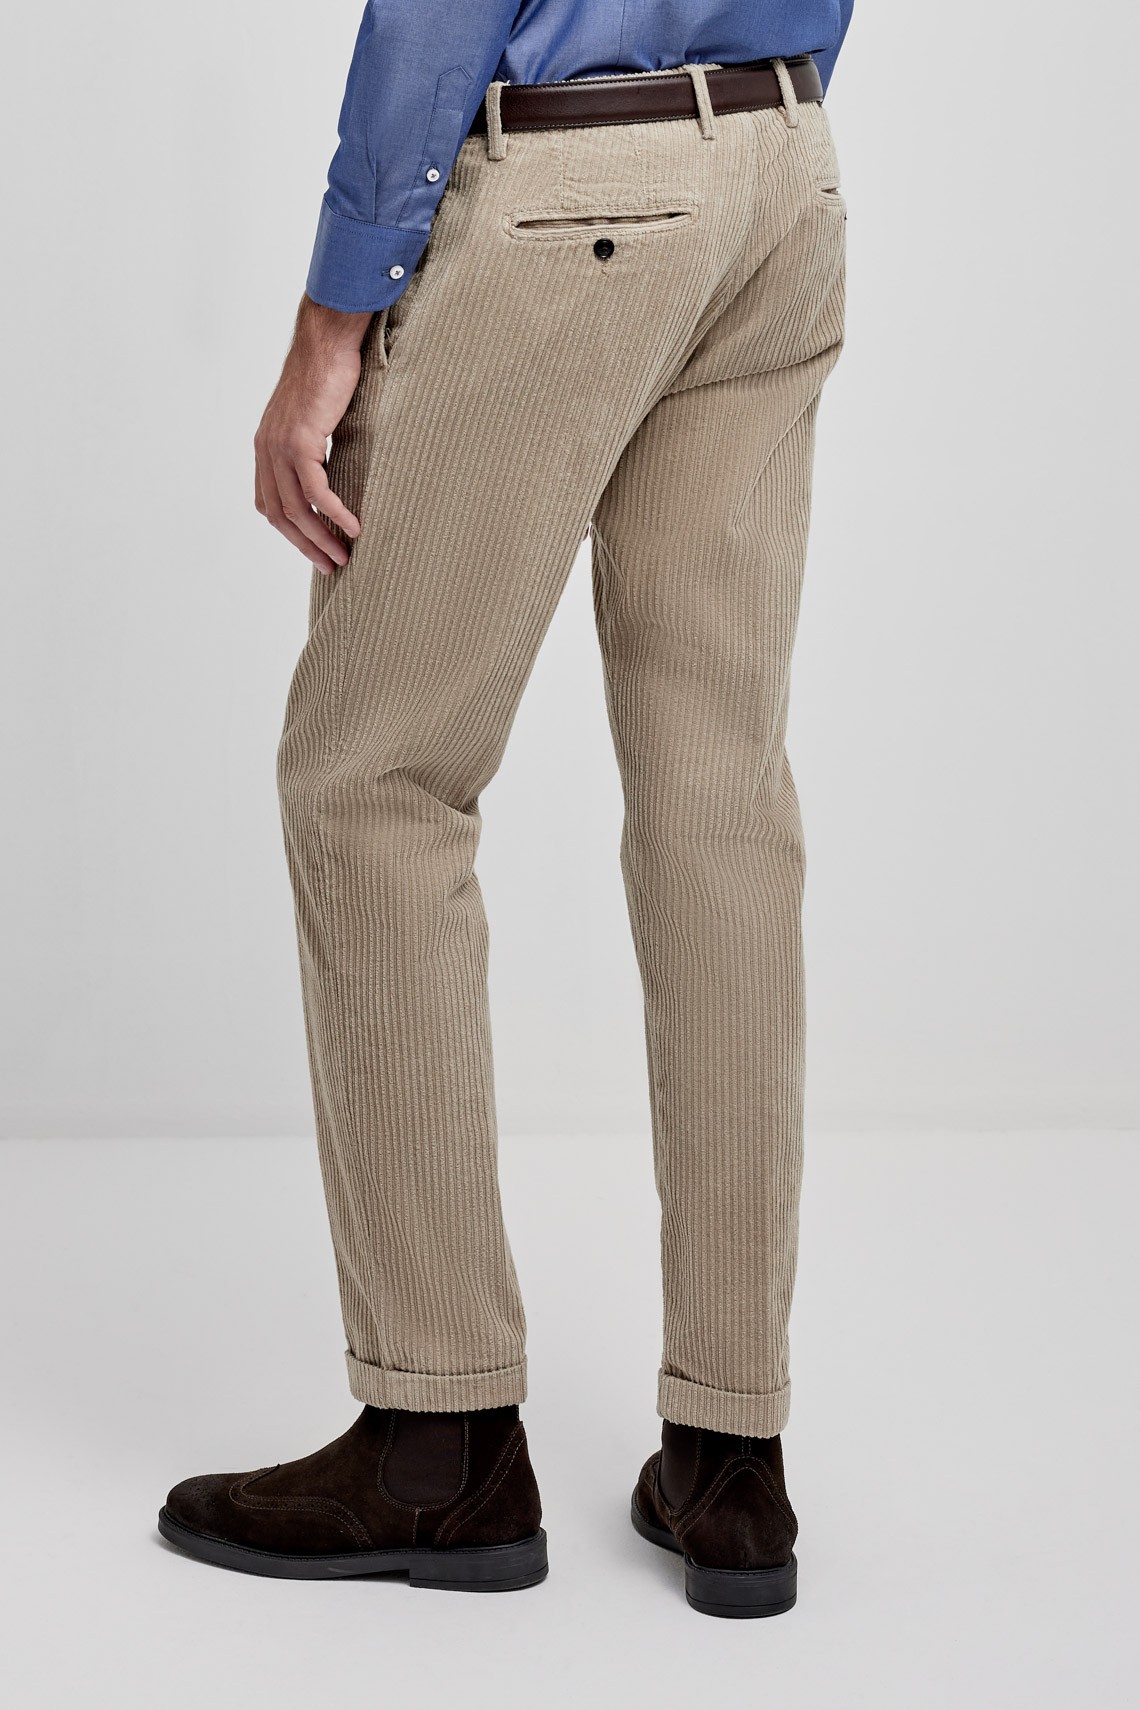 Brick cotton pants